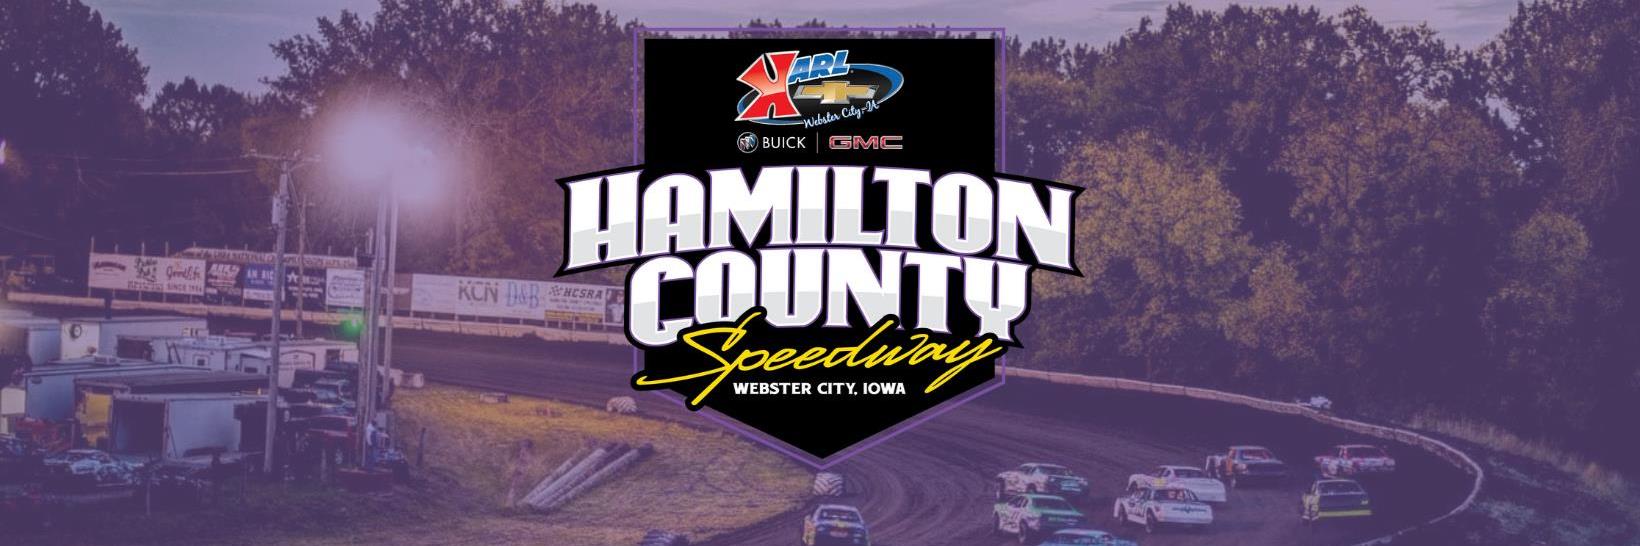 8/6/2022 - Hamilton County Speedway